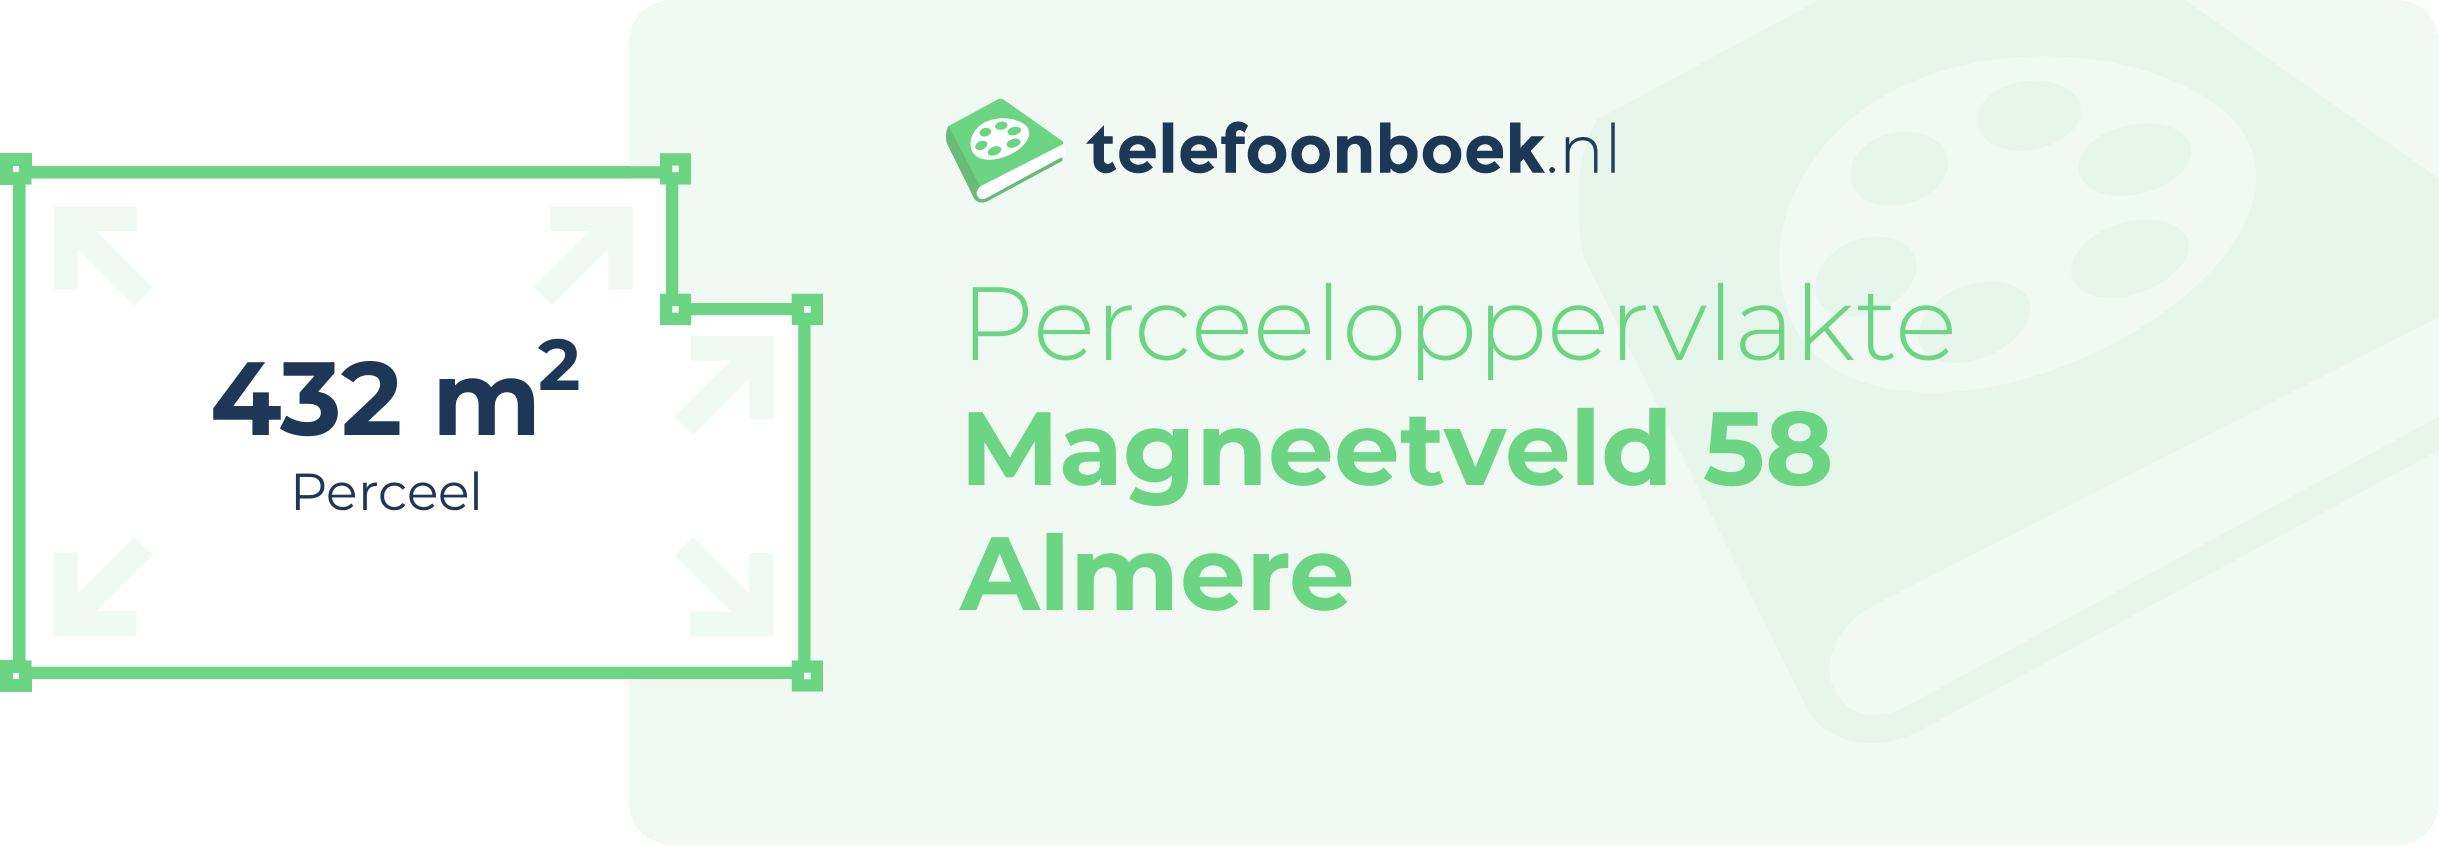 Perceeloppervlakte Magneetveld 58 Almere